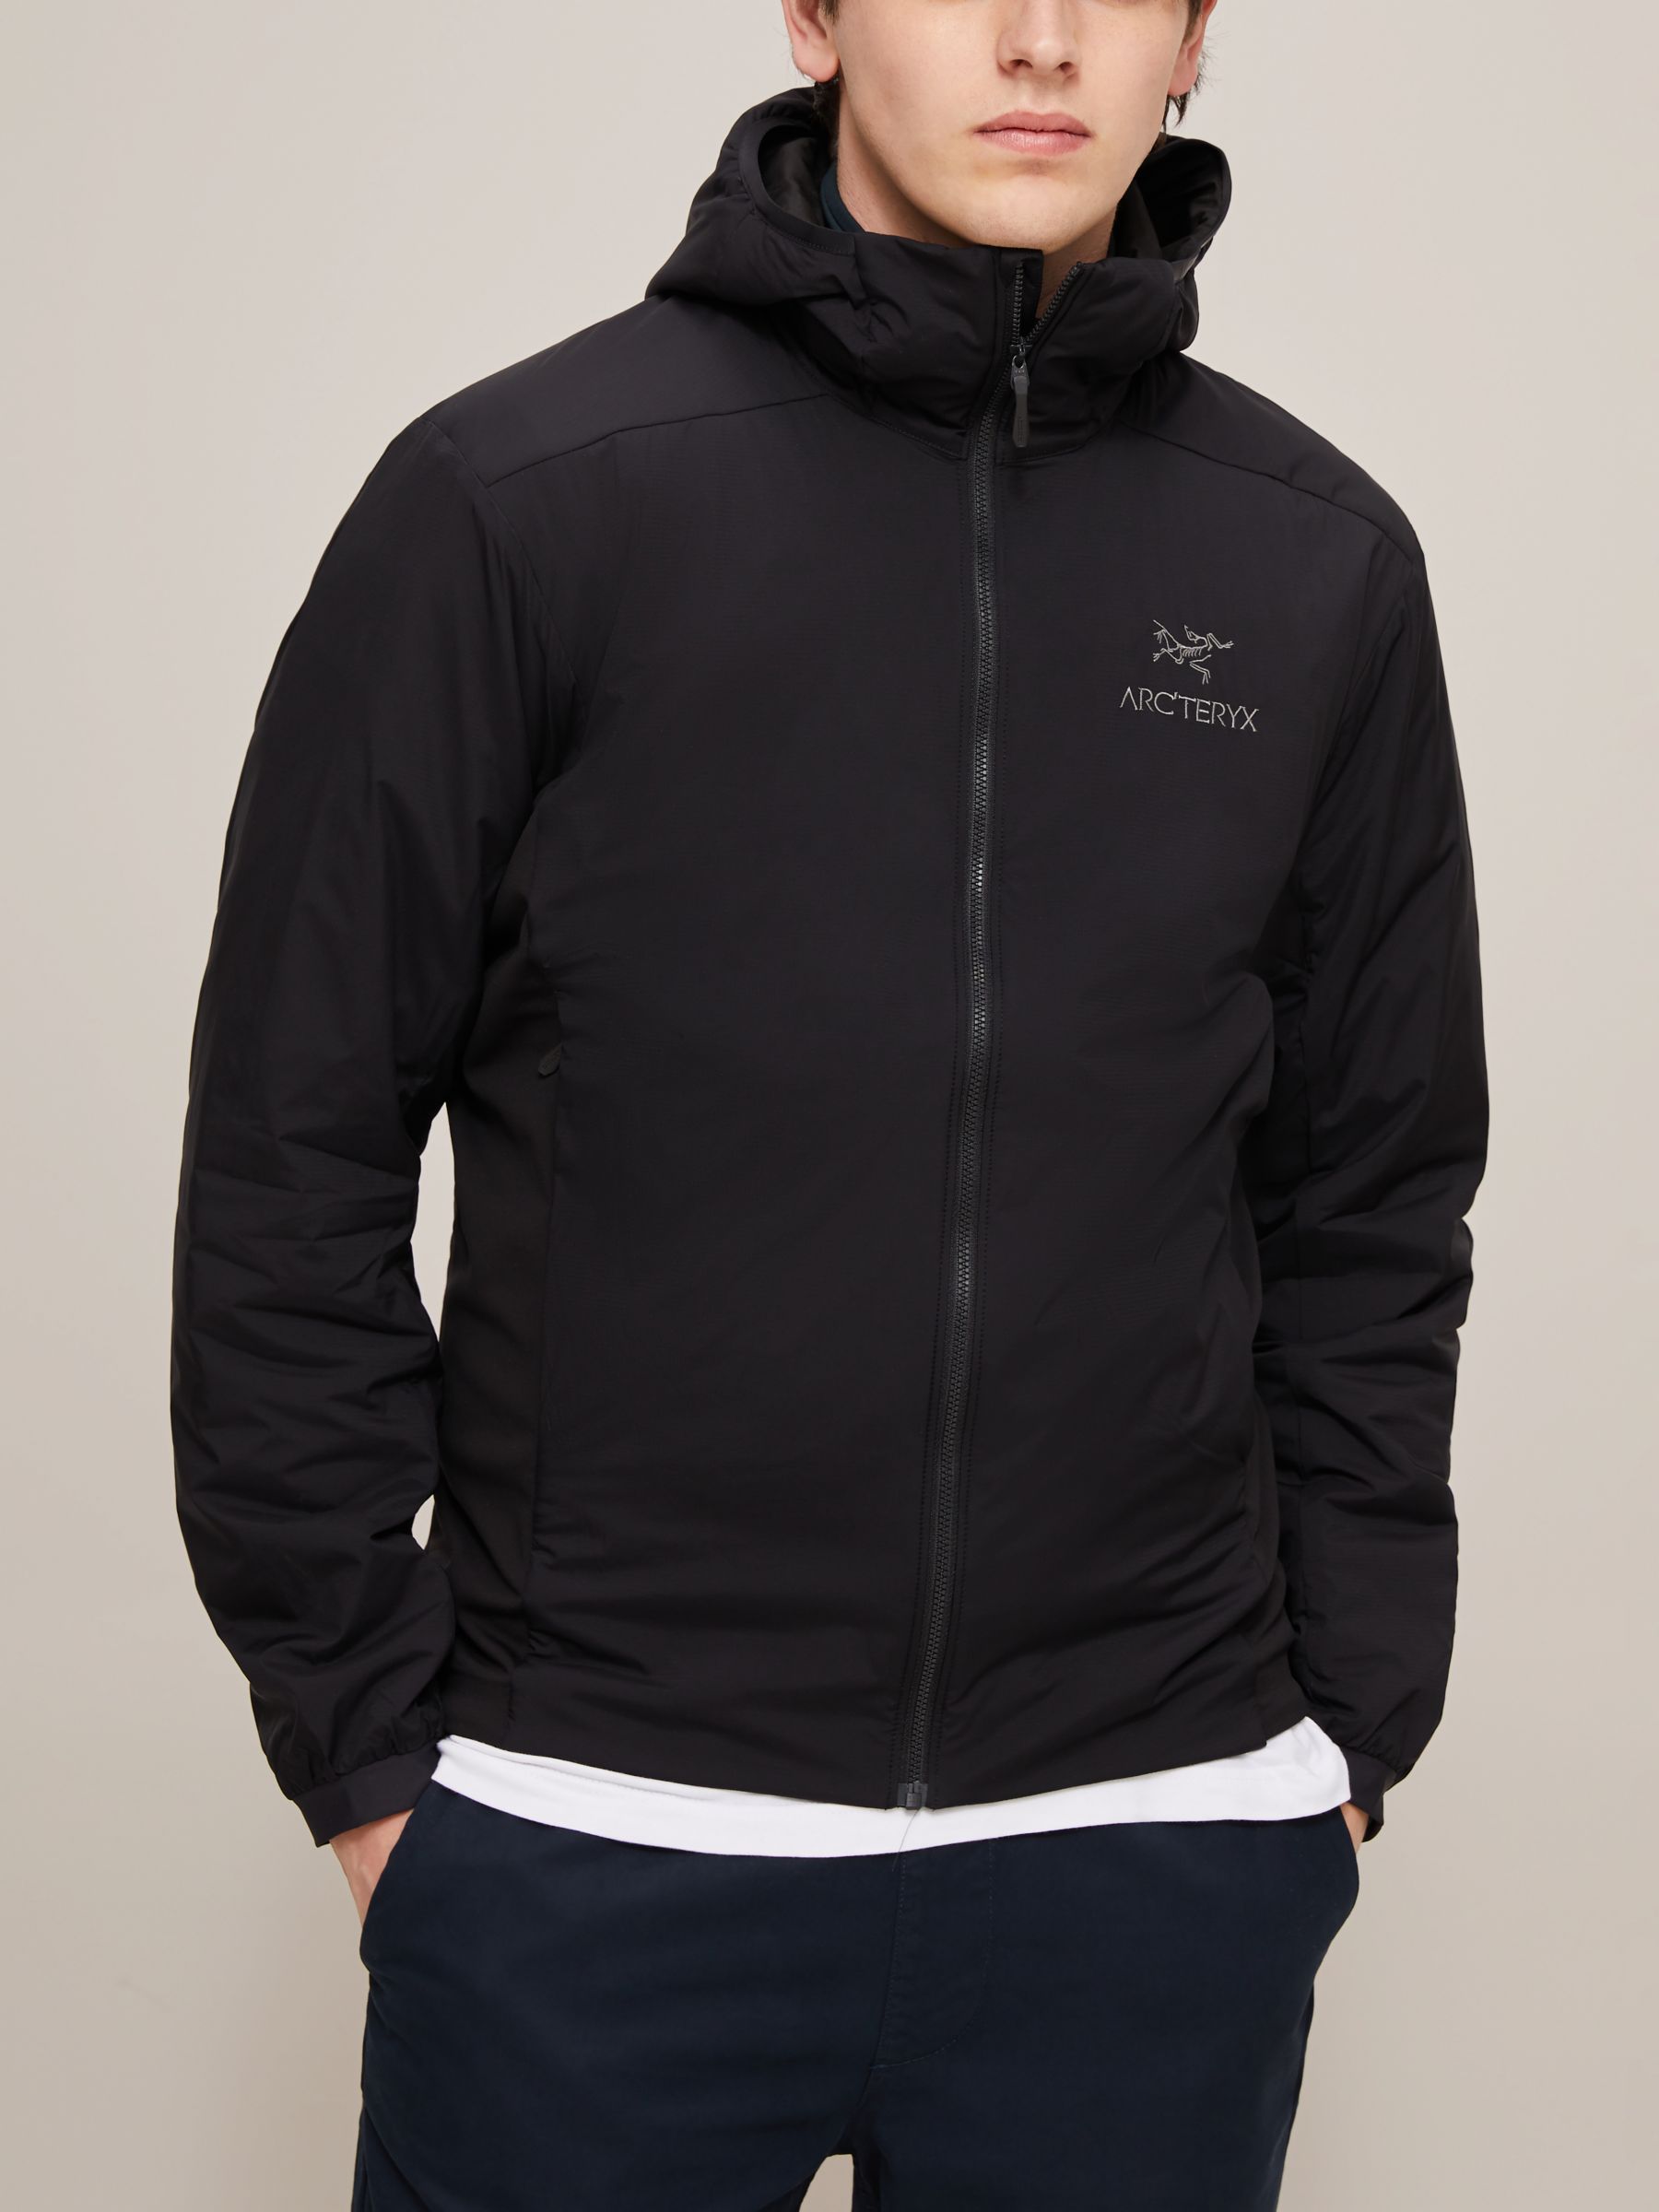 Arc'teryx Atom LT Men's Hooded Jacket, Black at John Lewis & Partners